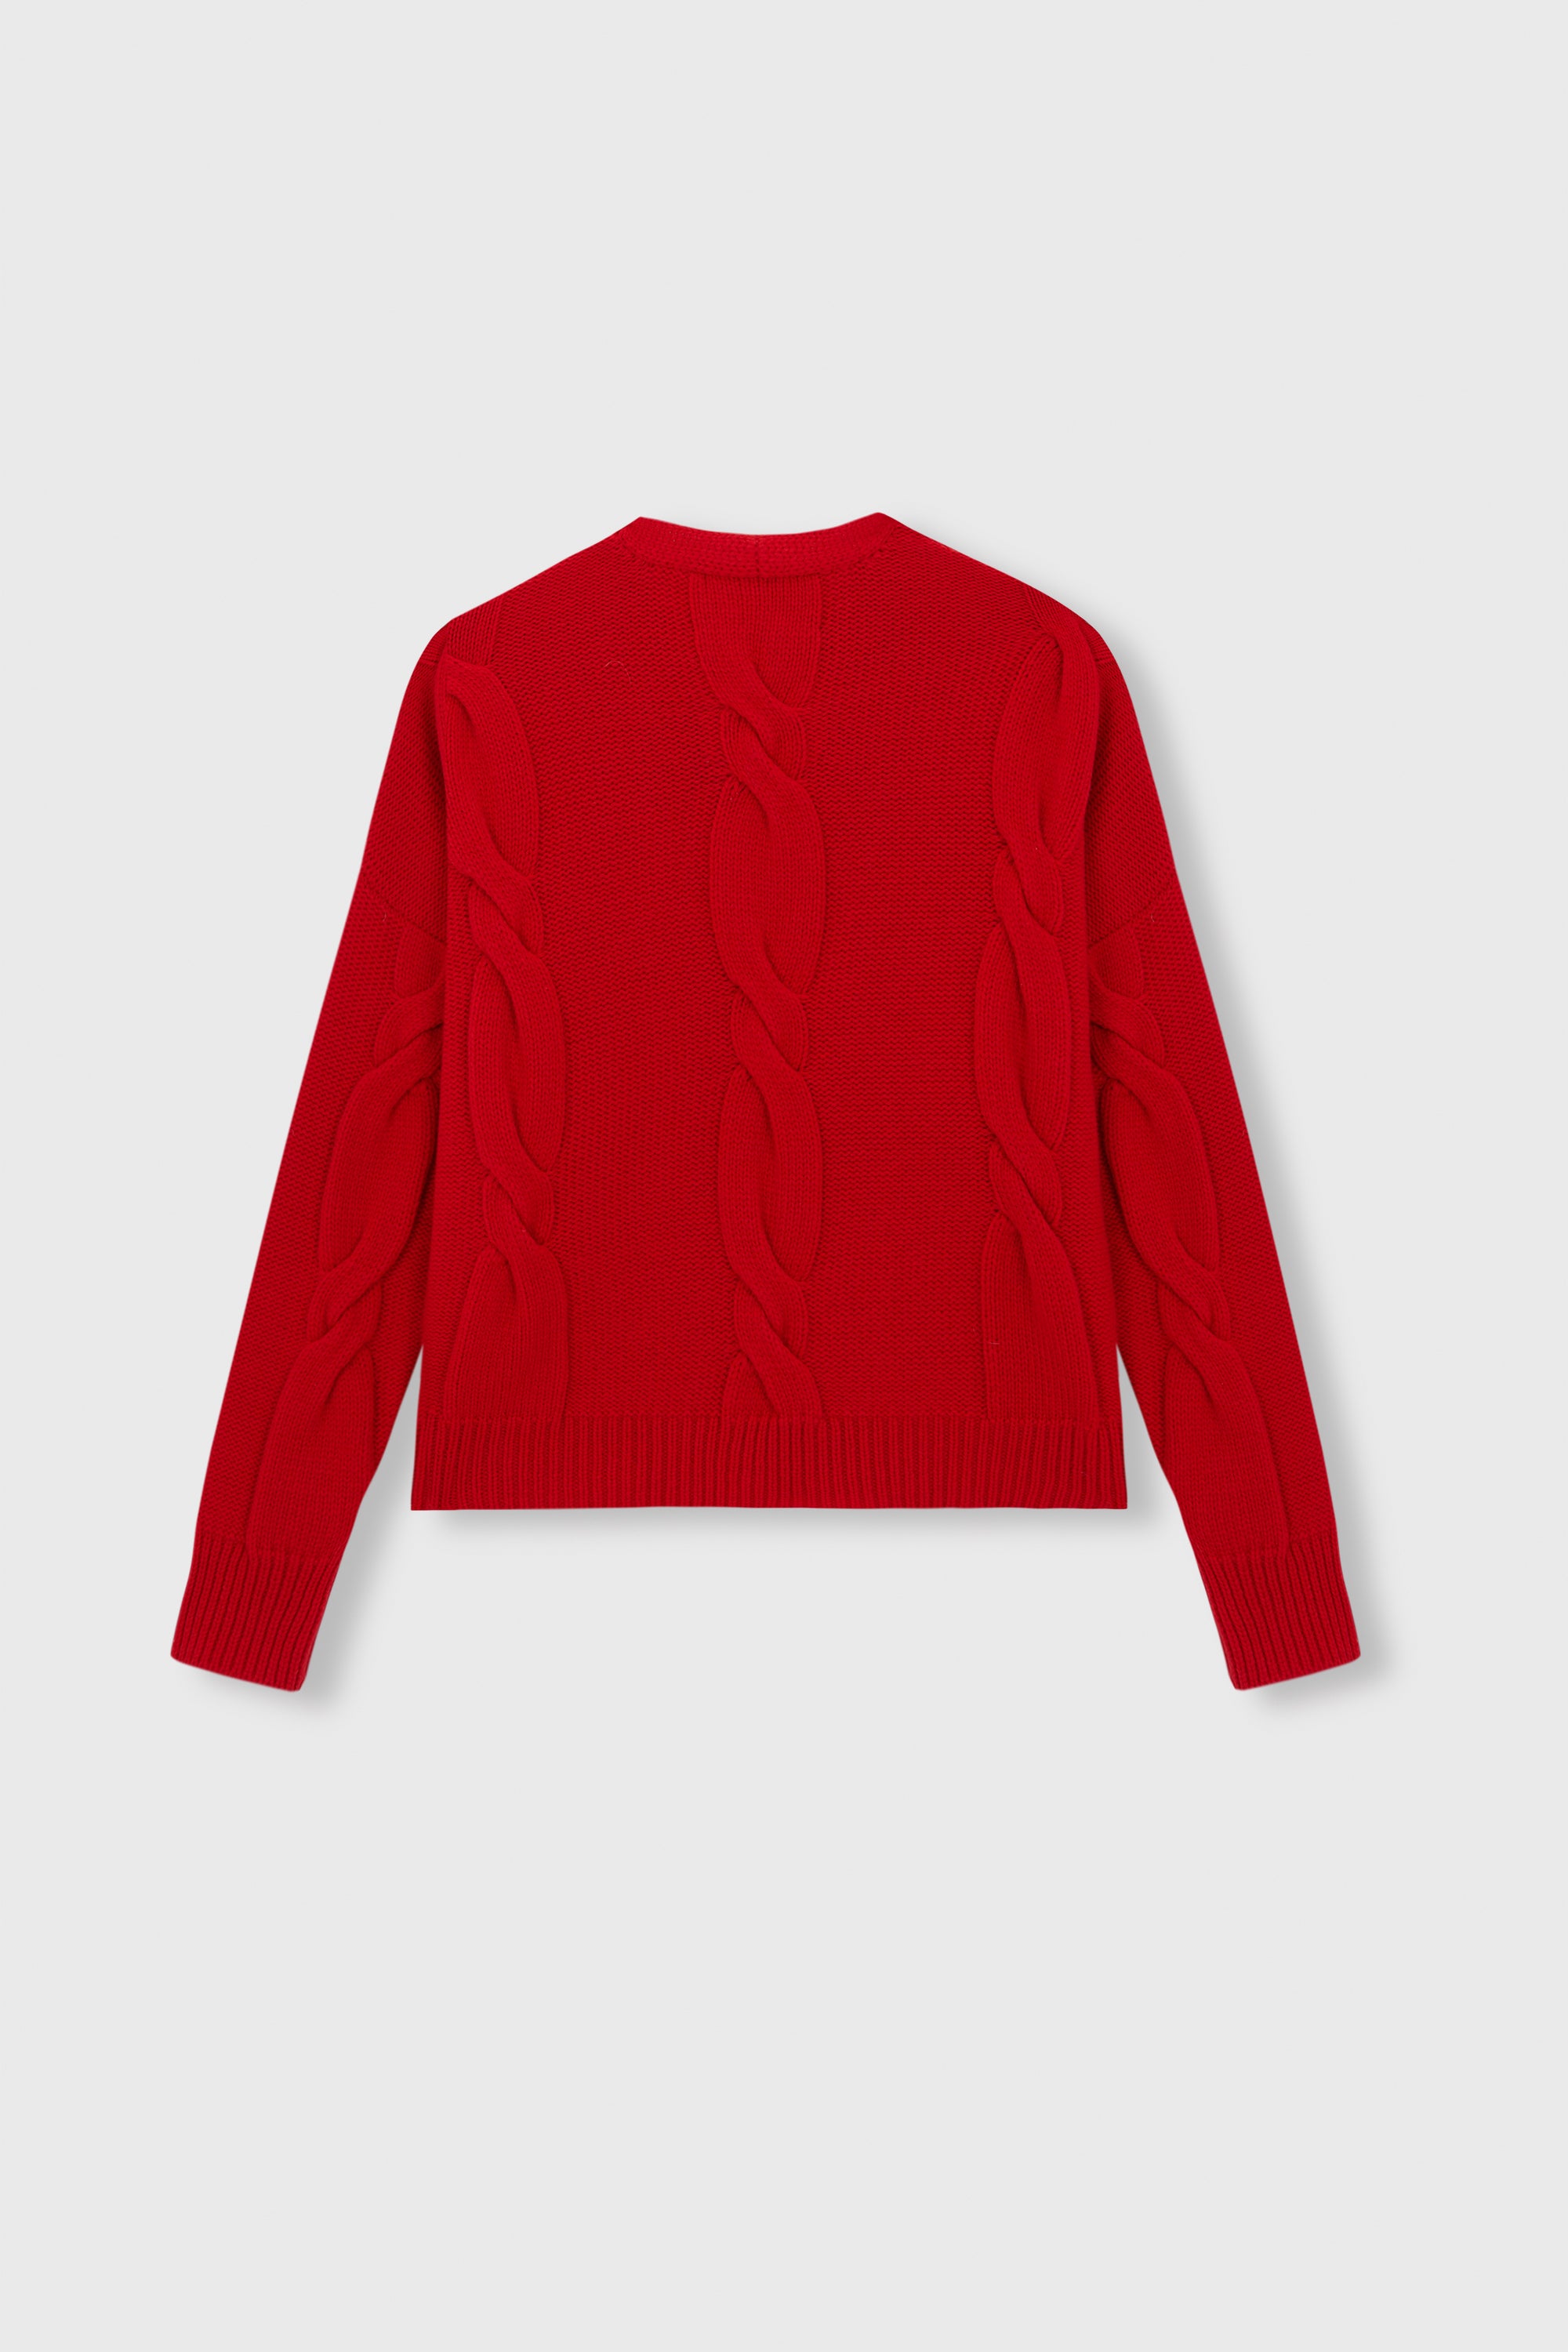 Wool Cashmere Braided Sweater Red Cordera